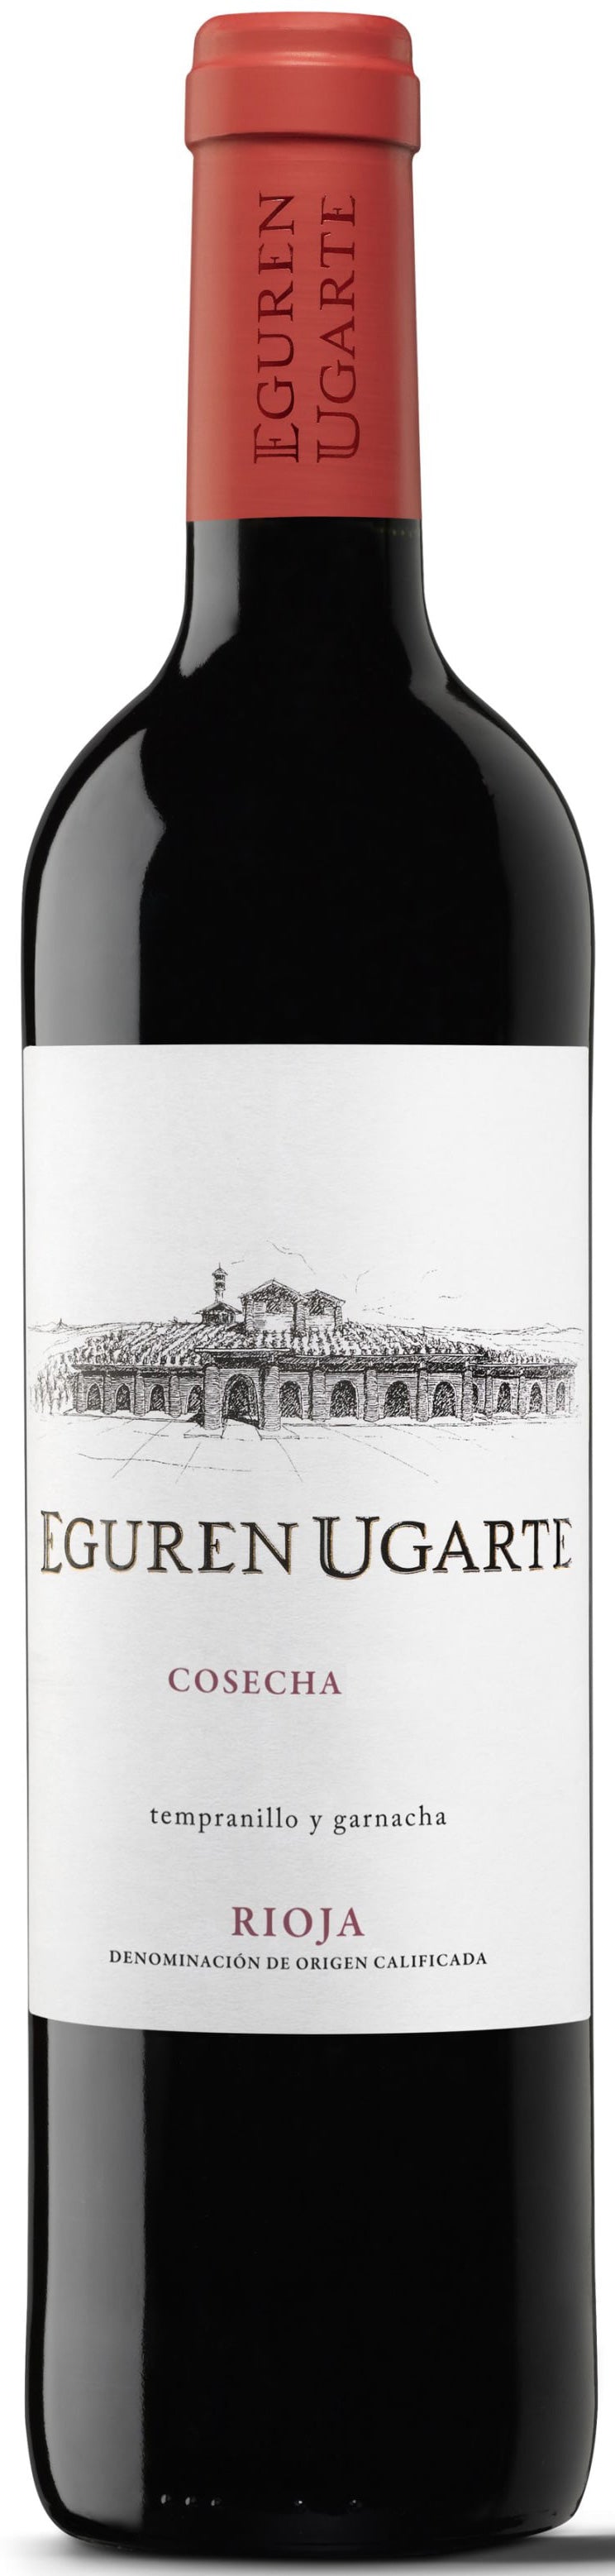 Eguren Ugarte Rioja Cosecha 2019